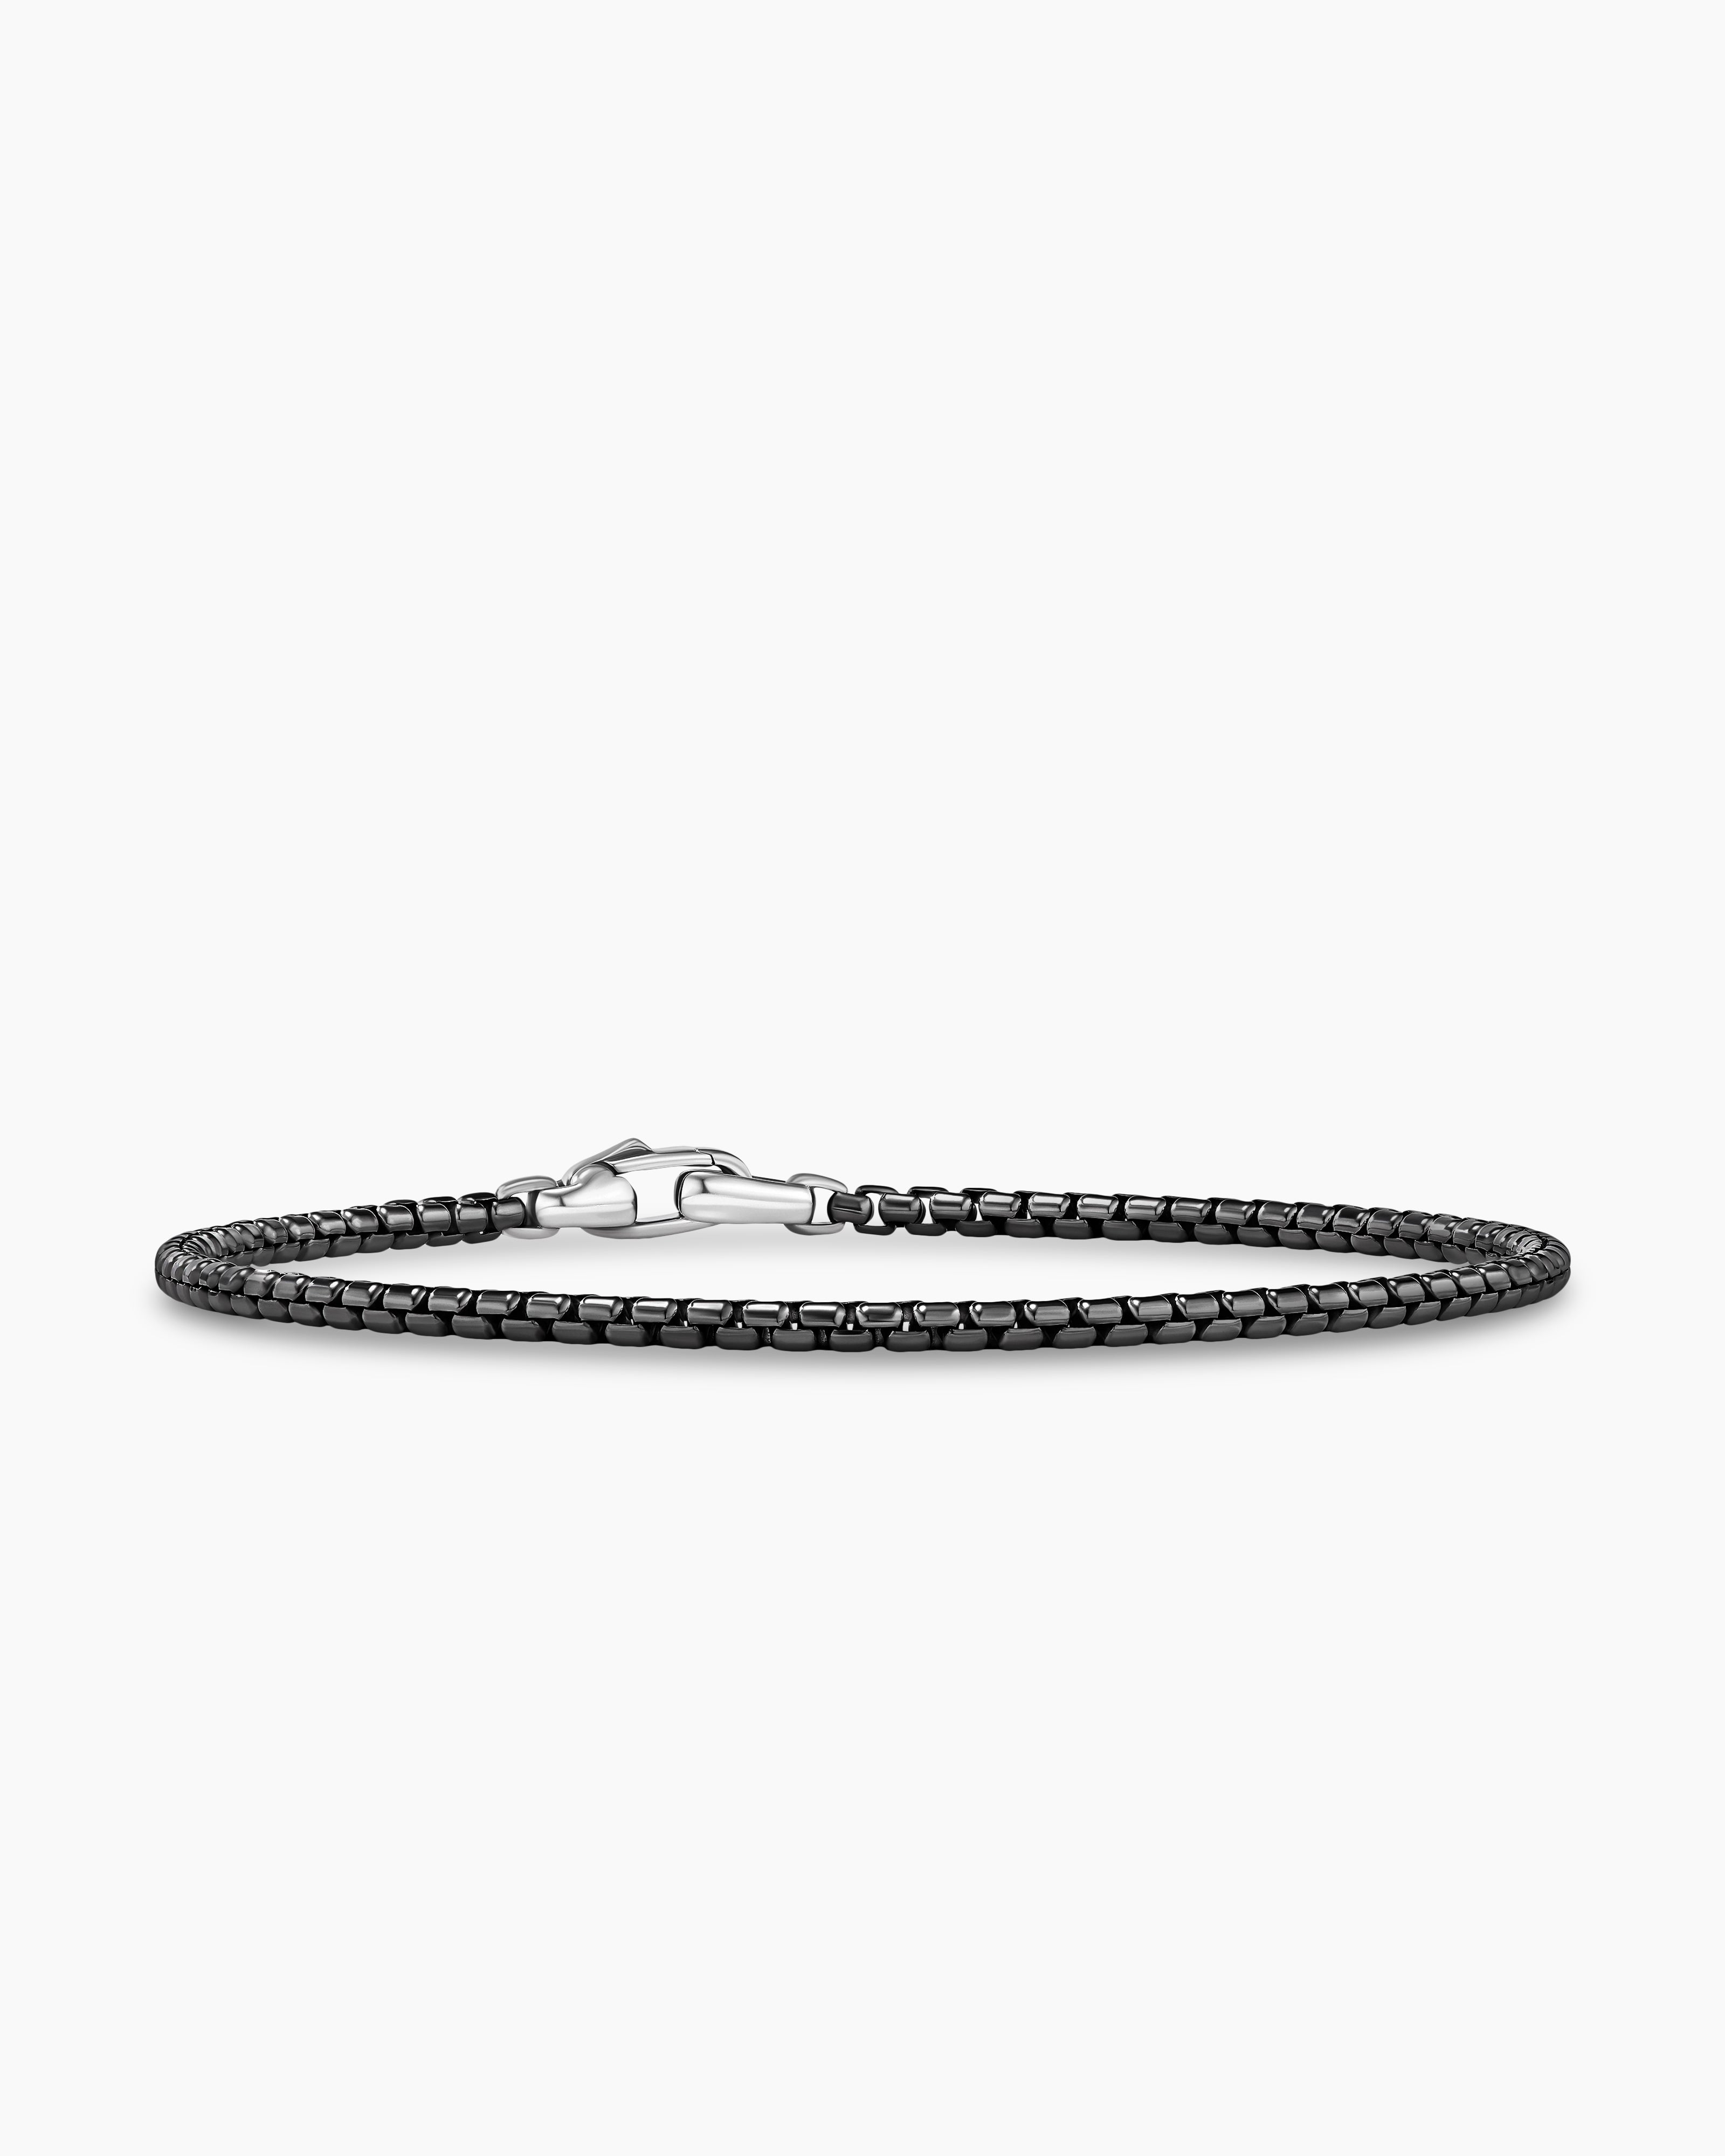 SUPRANO Tungsten Carbide Men's Link Bracelet